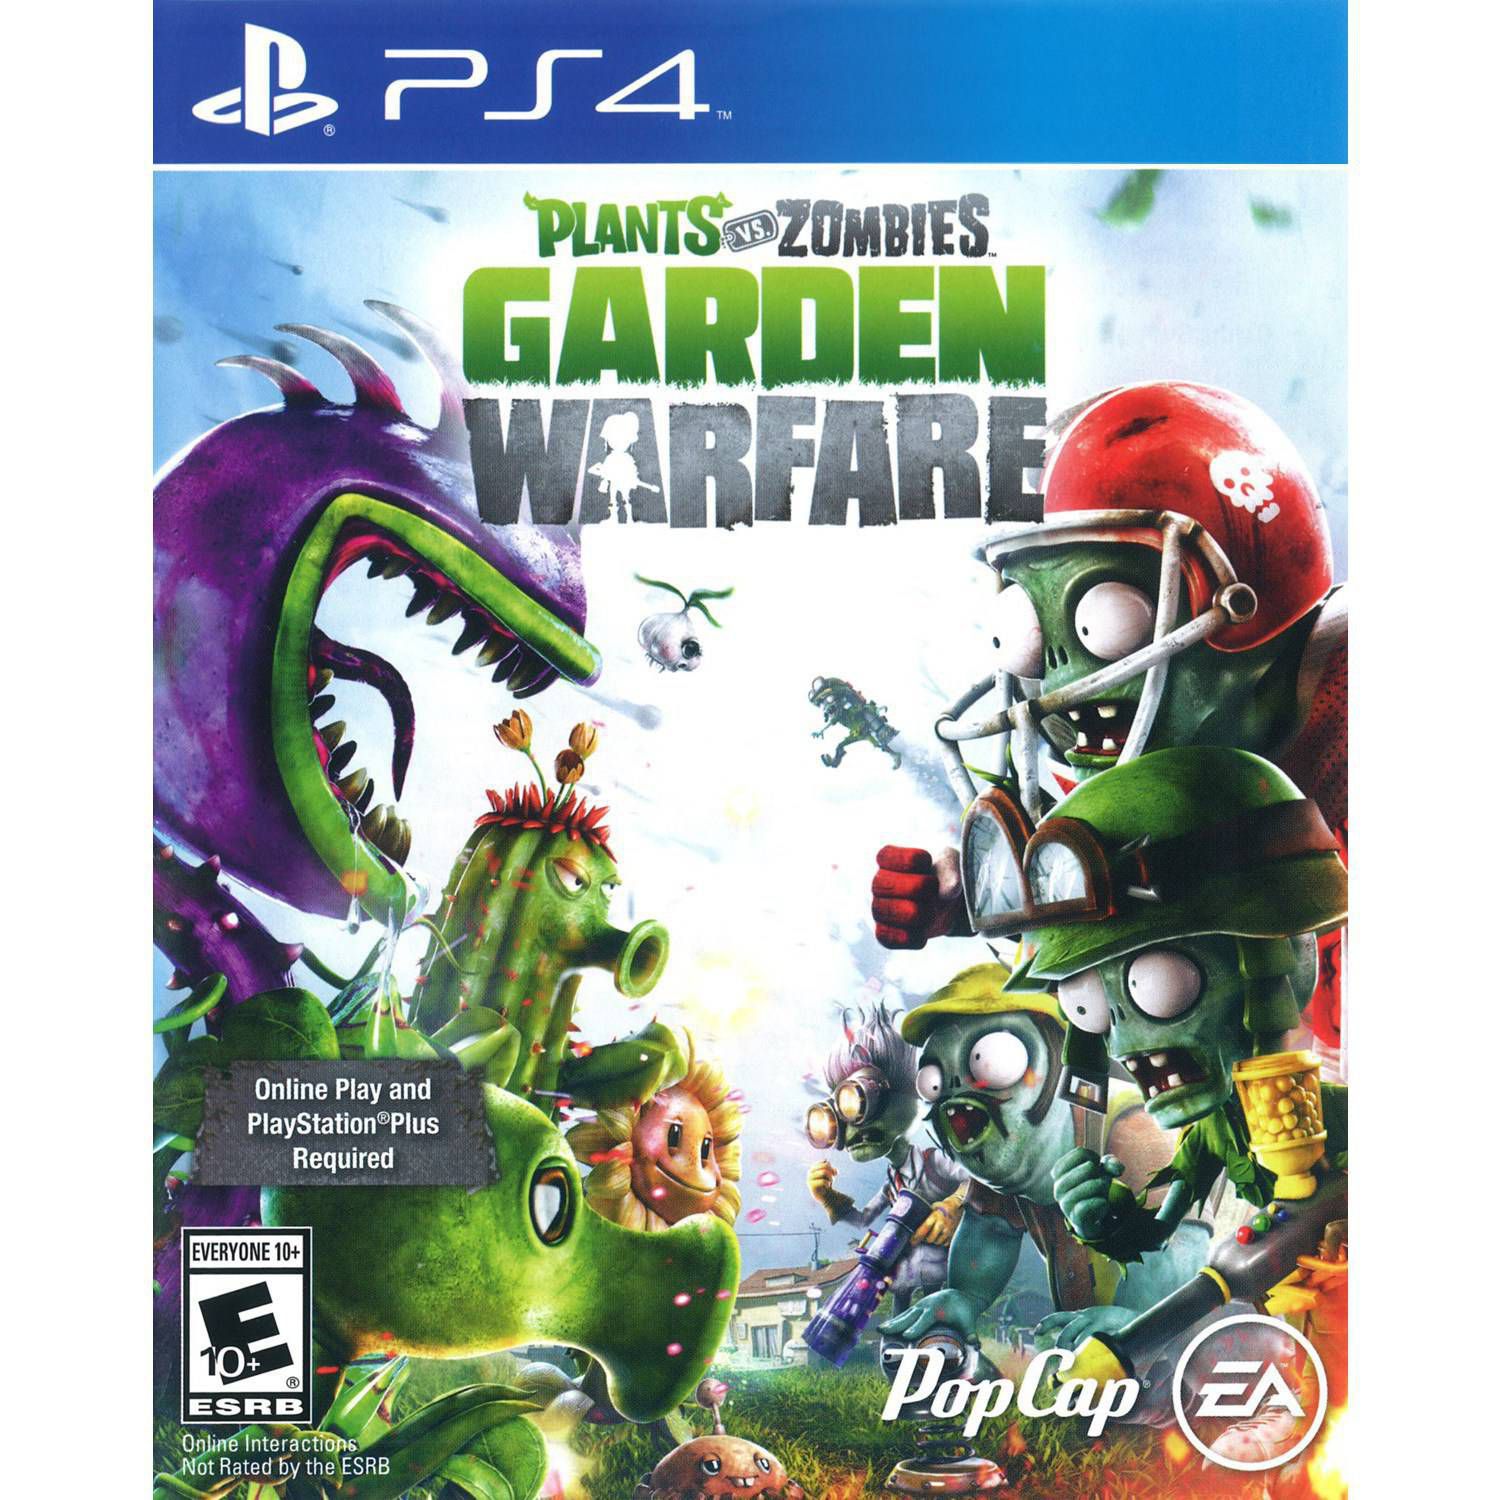 Plants Vs Zombies 3 Battle for Neighborville - Xbox One - Game Games - Loja  de Games Online